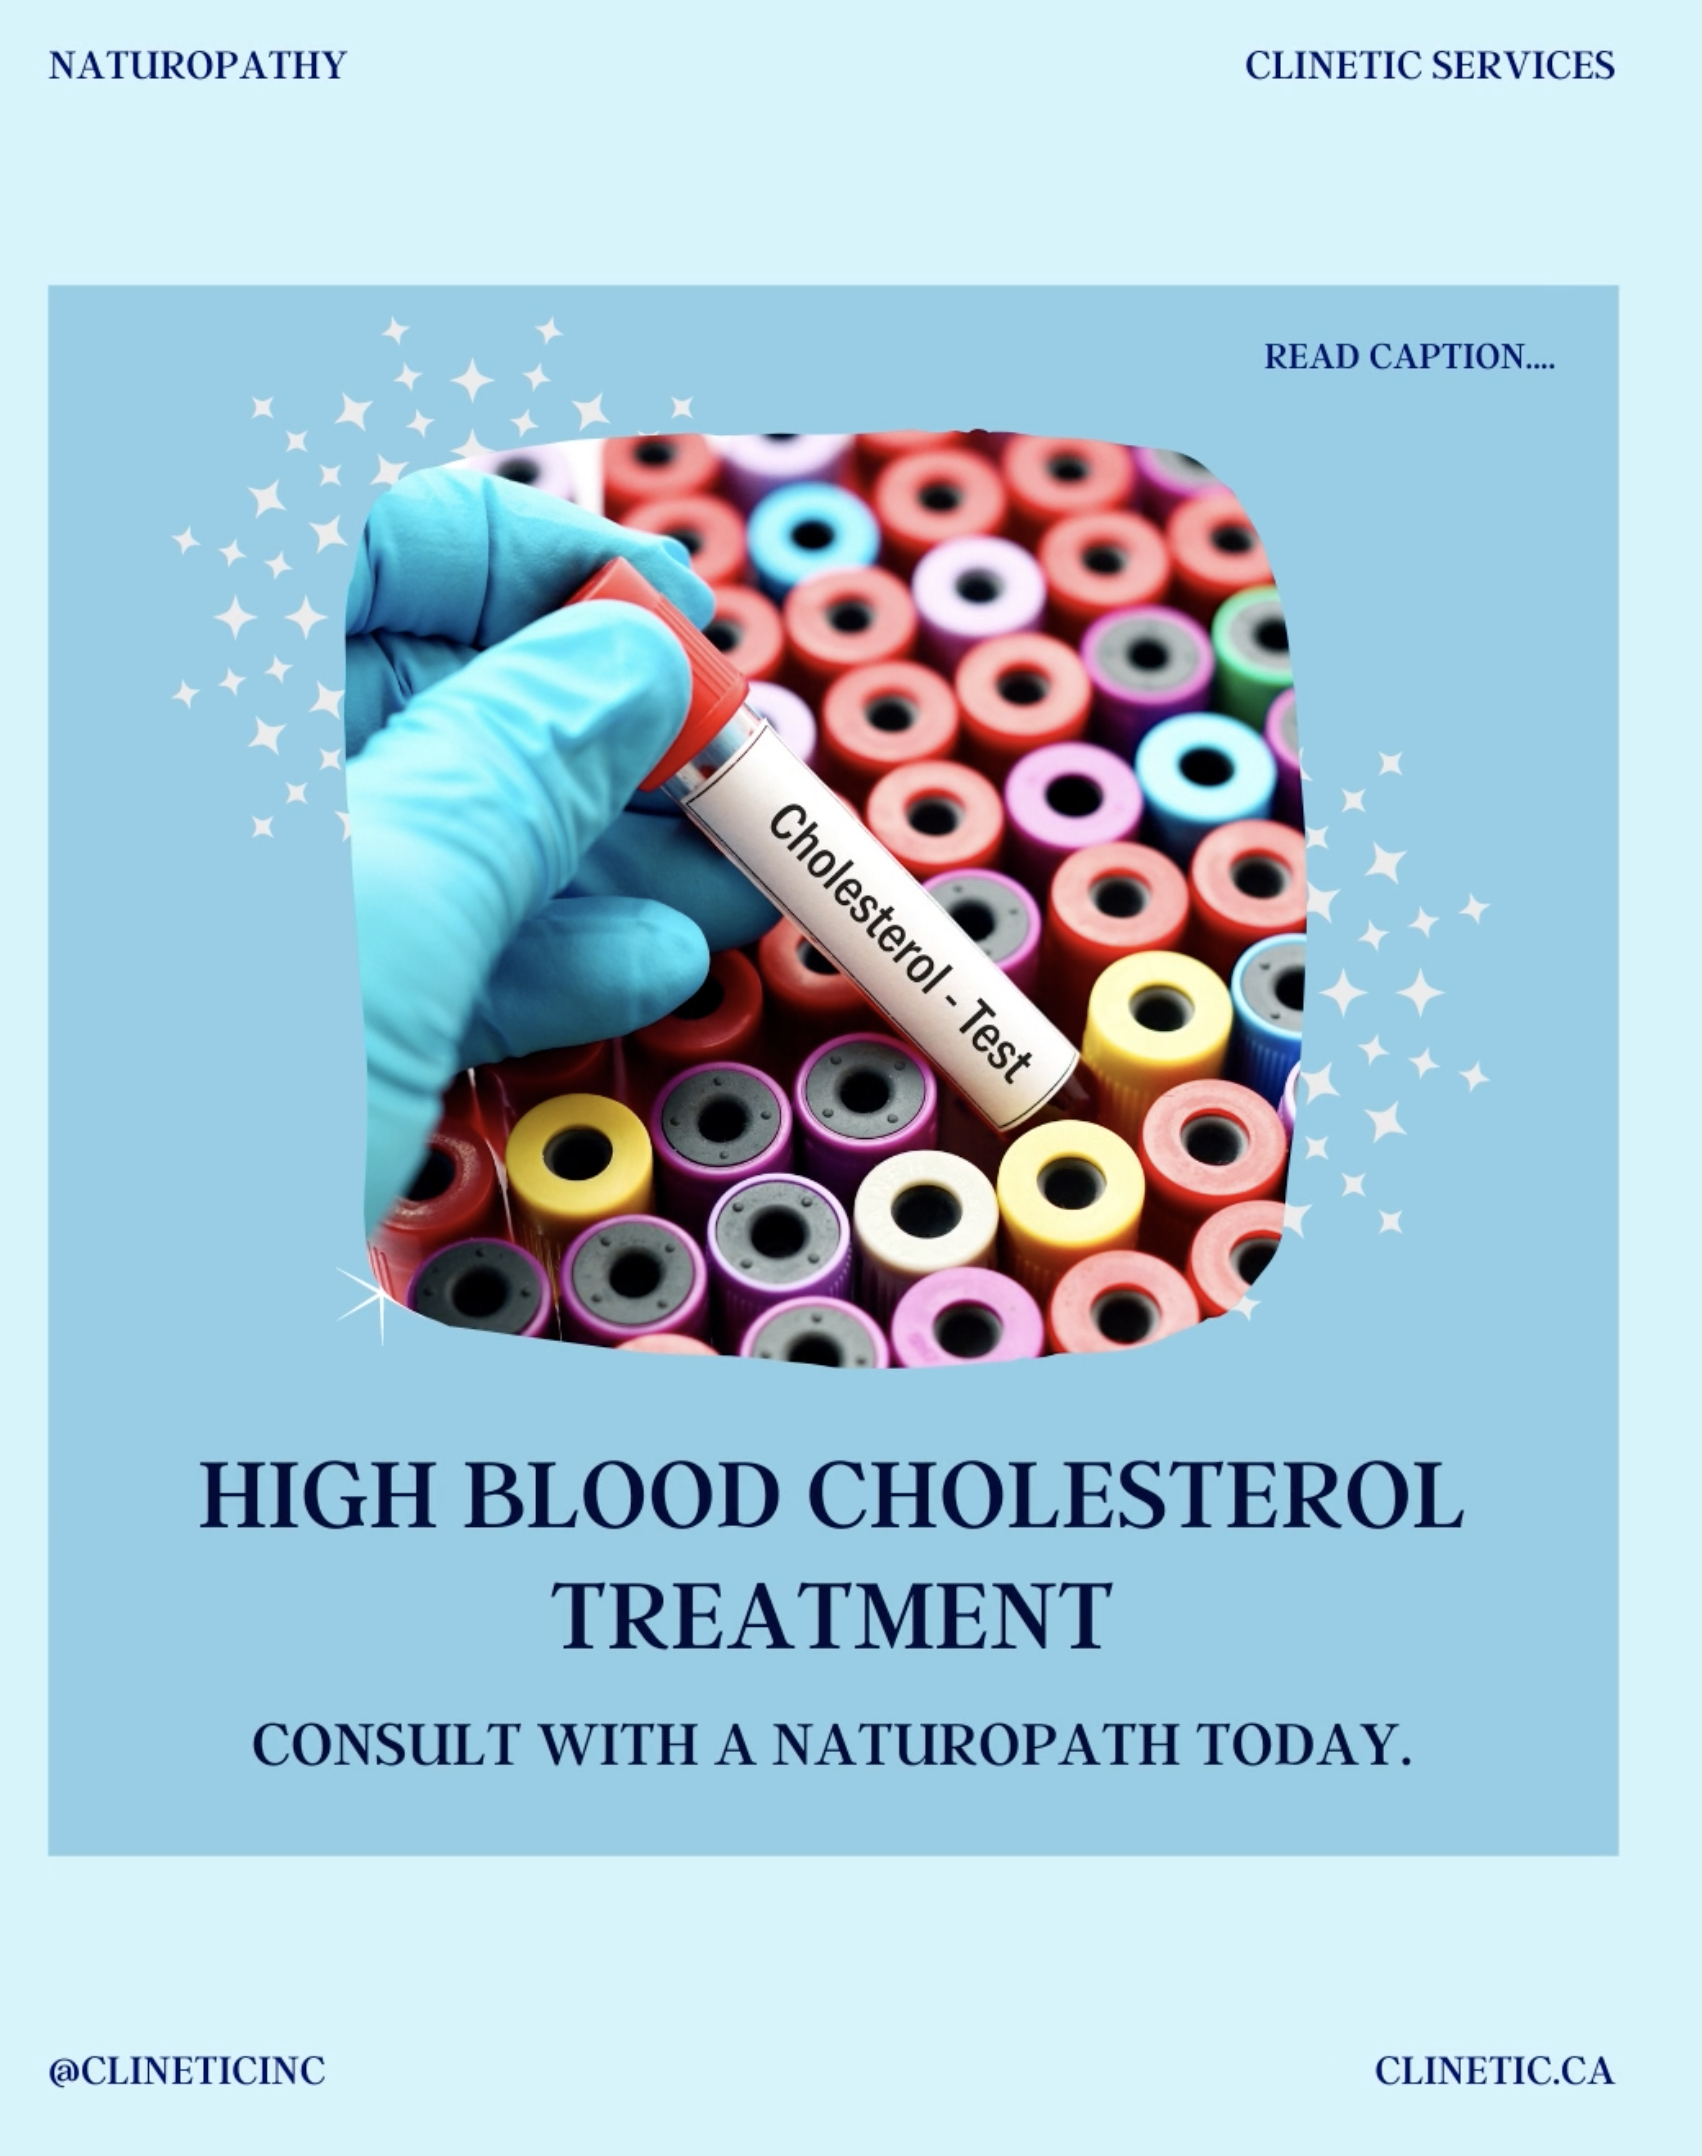 High blood cholesterol treatment